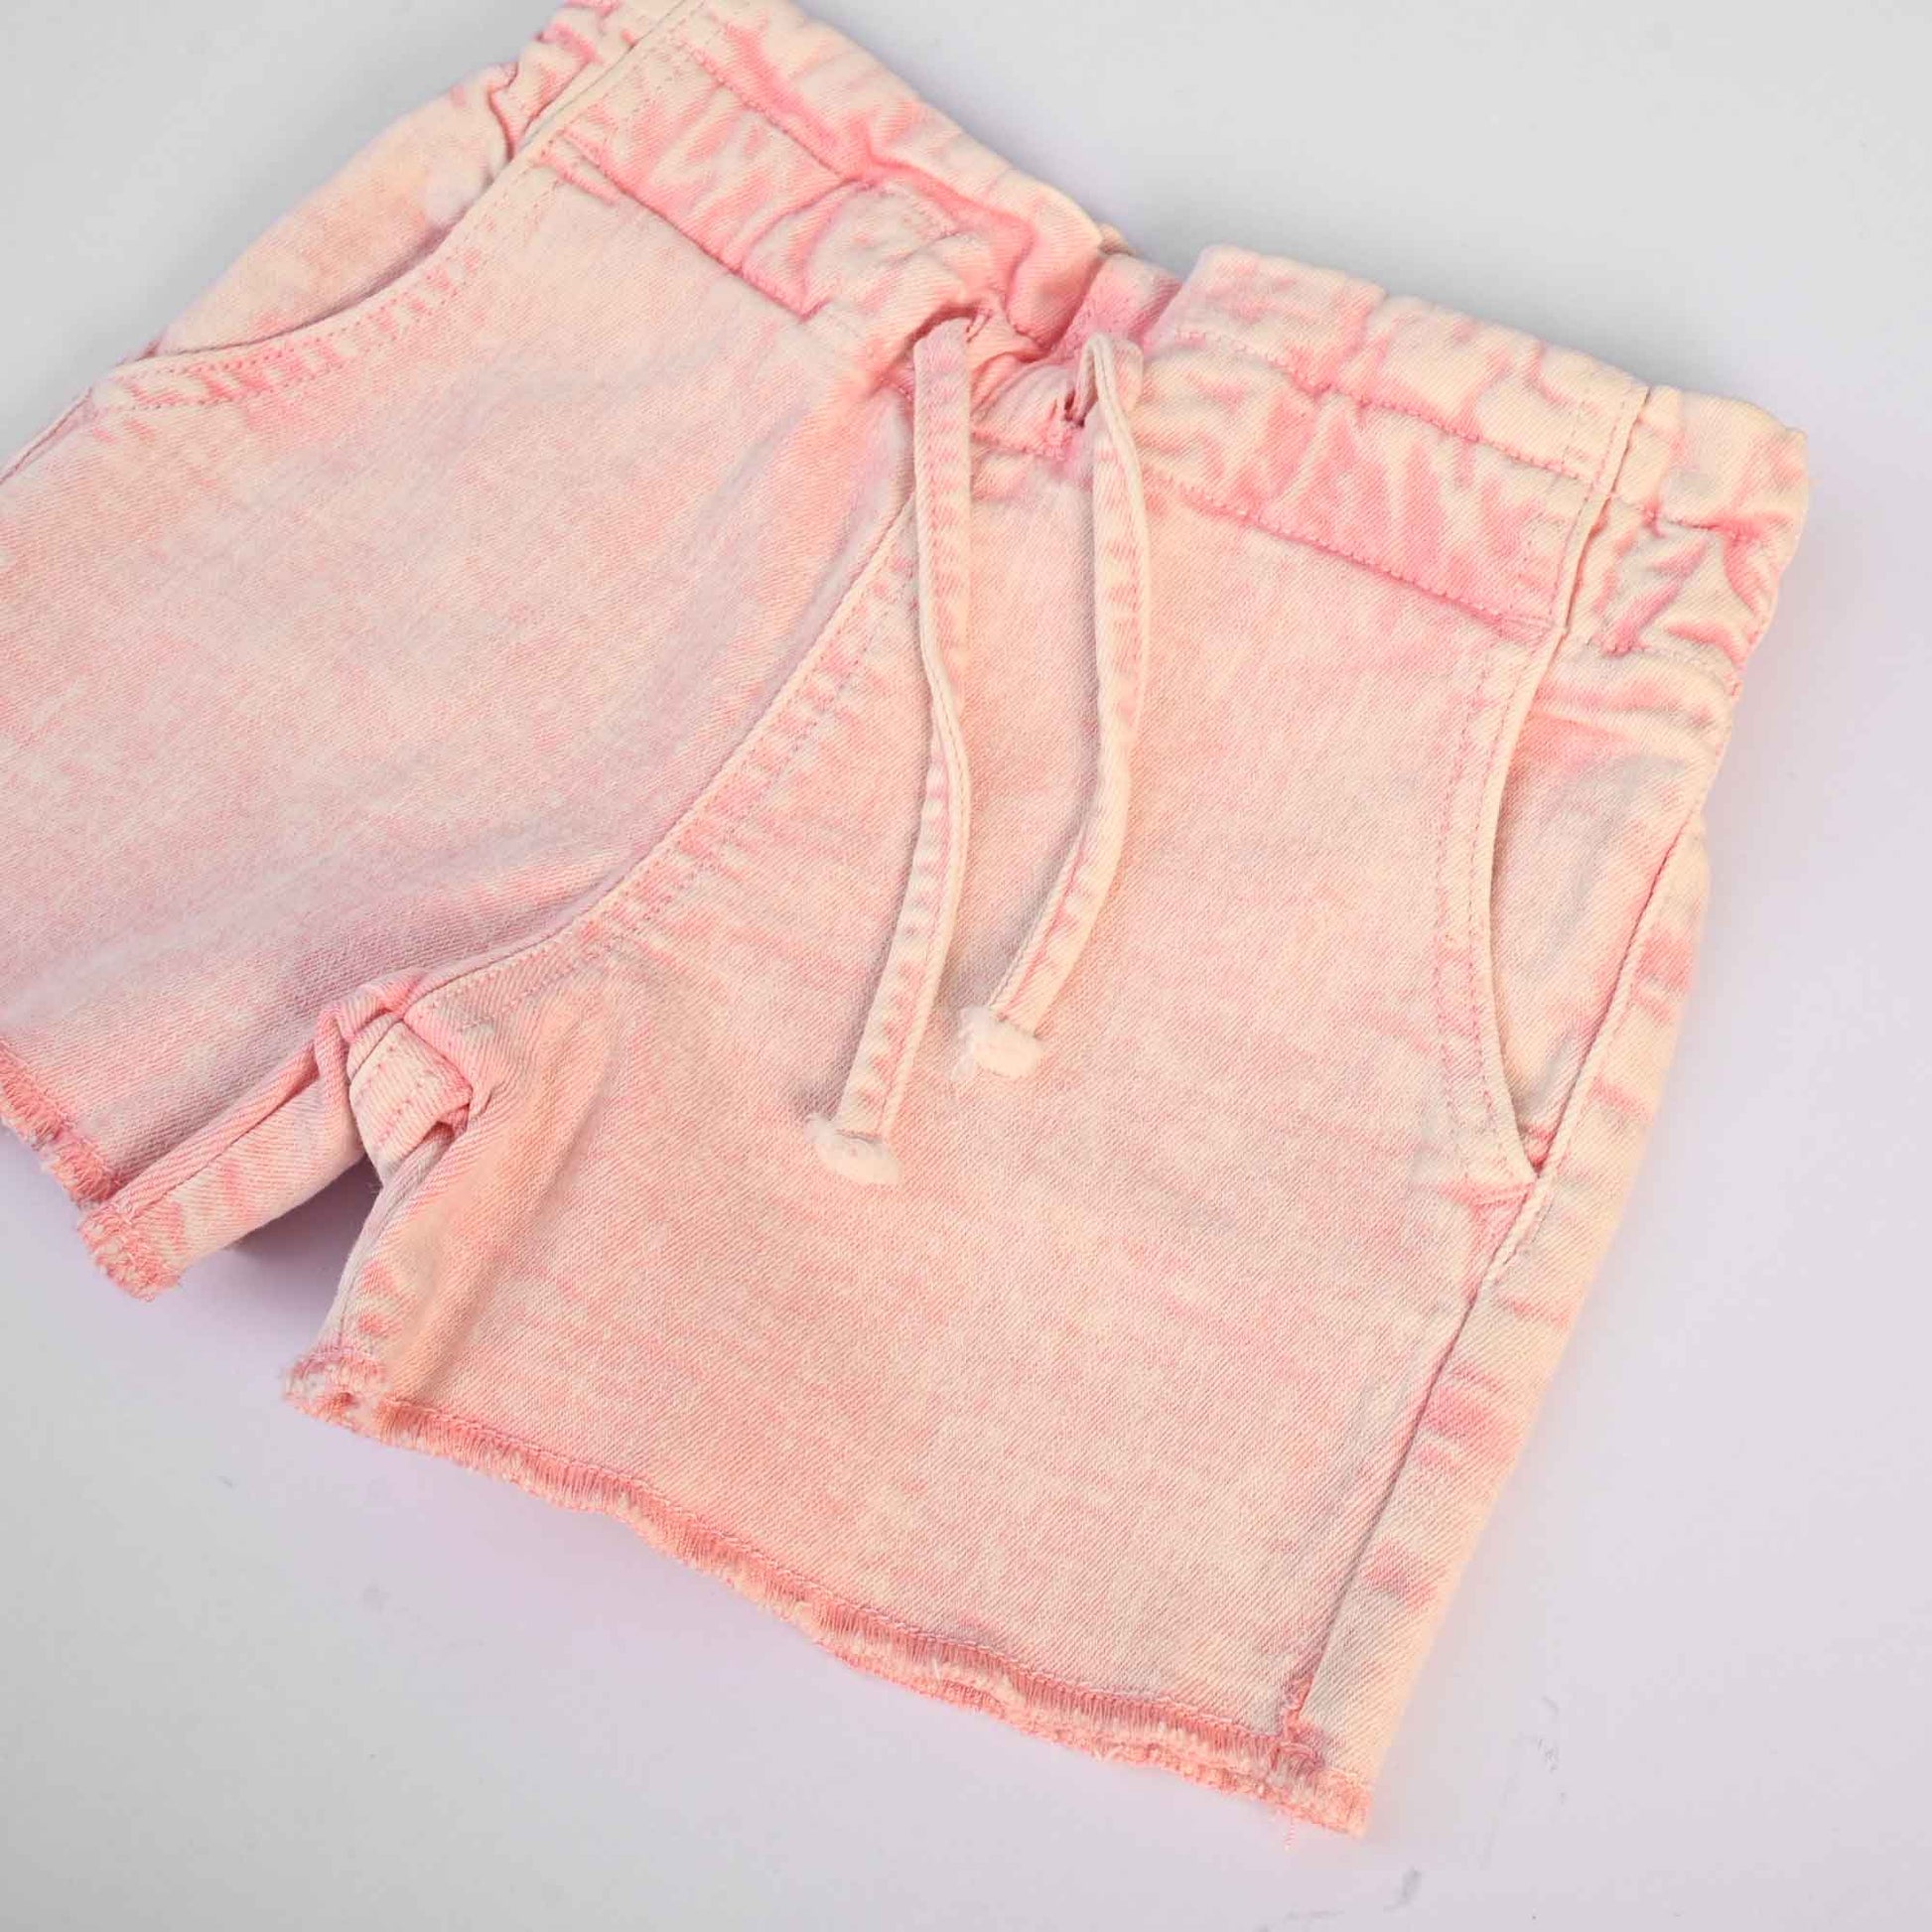 Only Kid's Sand Washed Denim Shorts Girl's Shorts Minhas Garments 